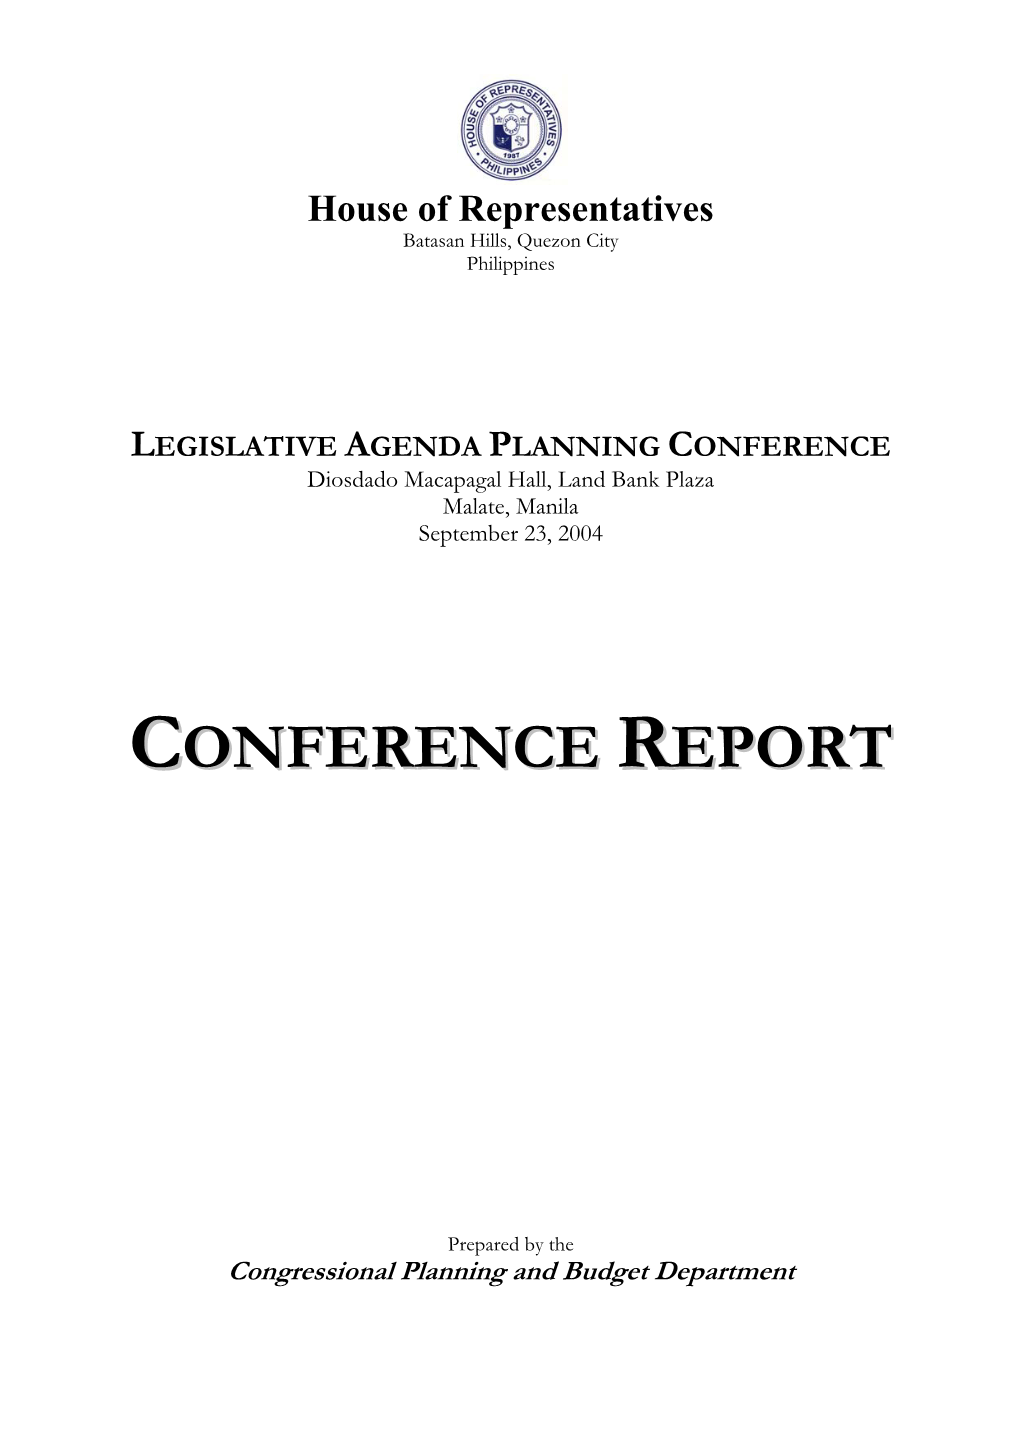 Legislative Agenda Planning Conference Report